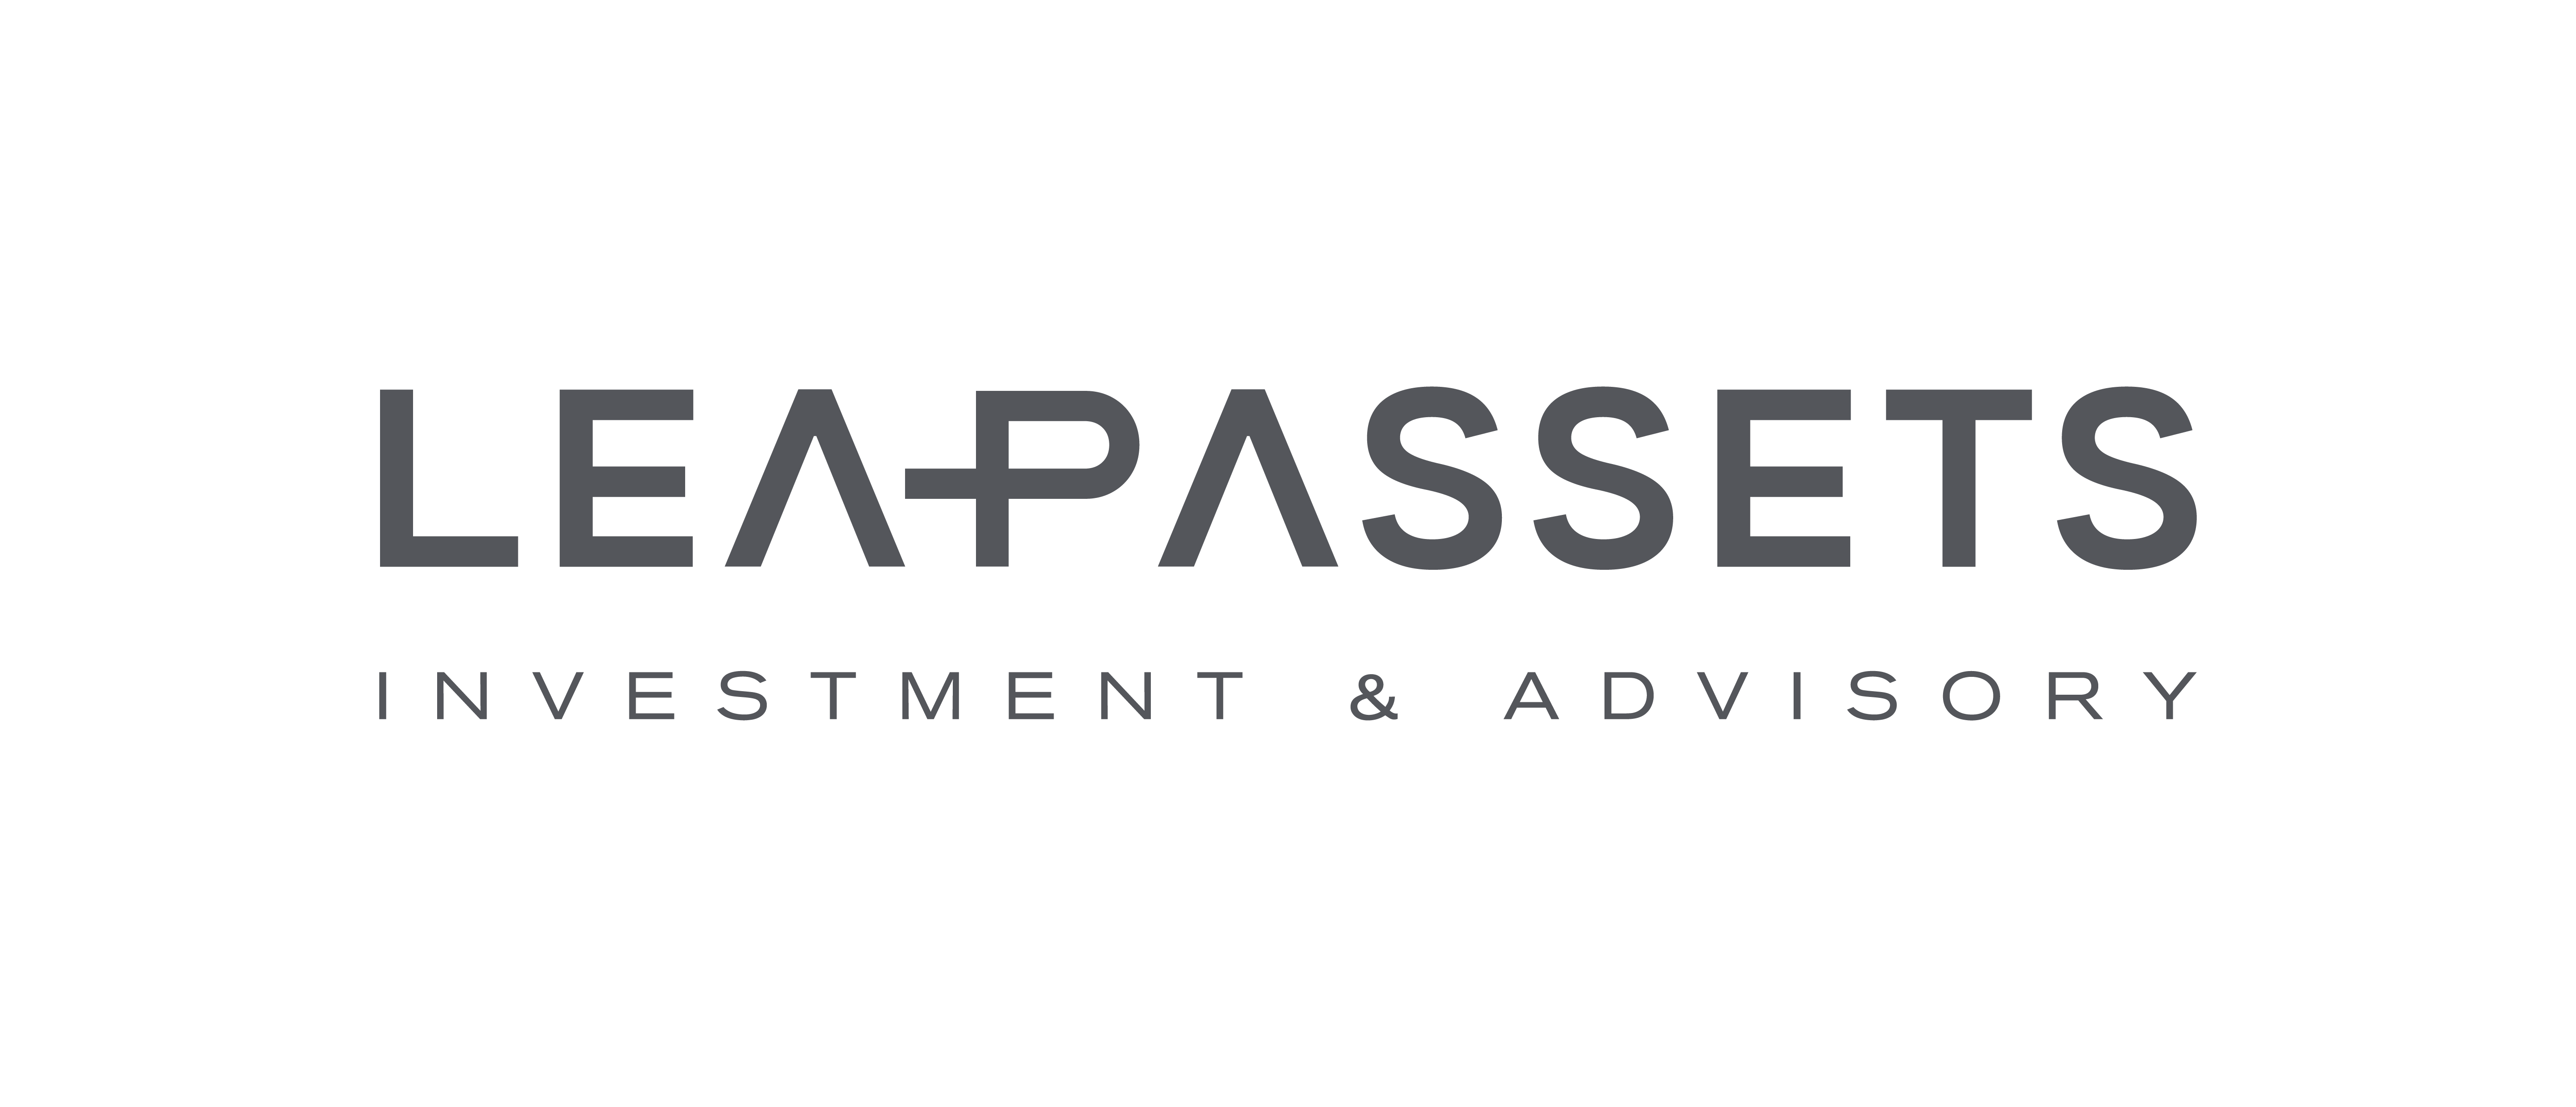 Portela - Leap Assets logo